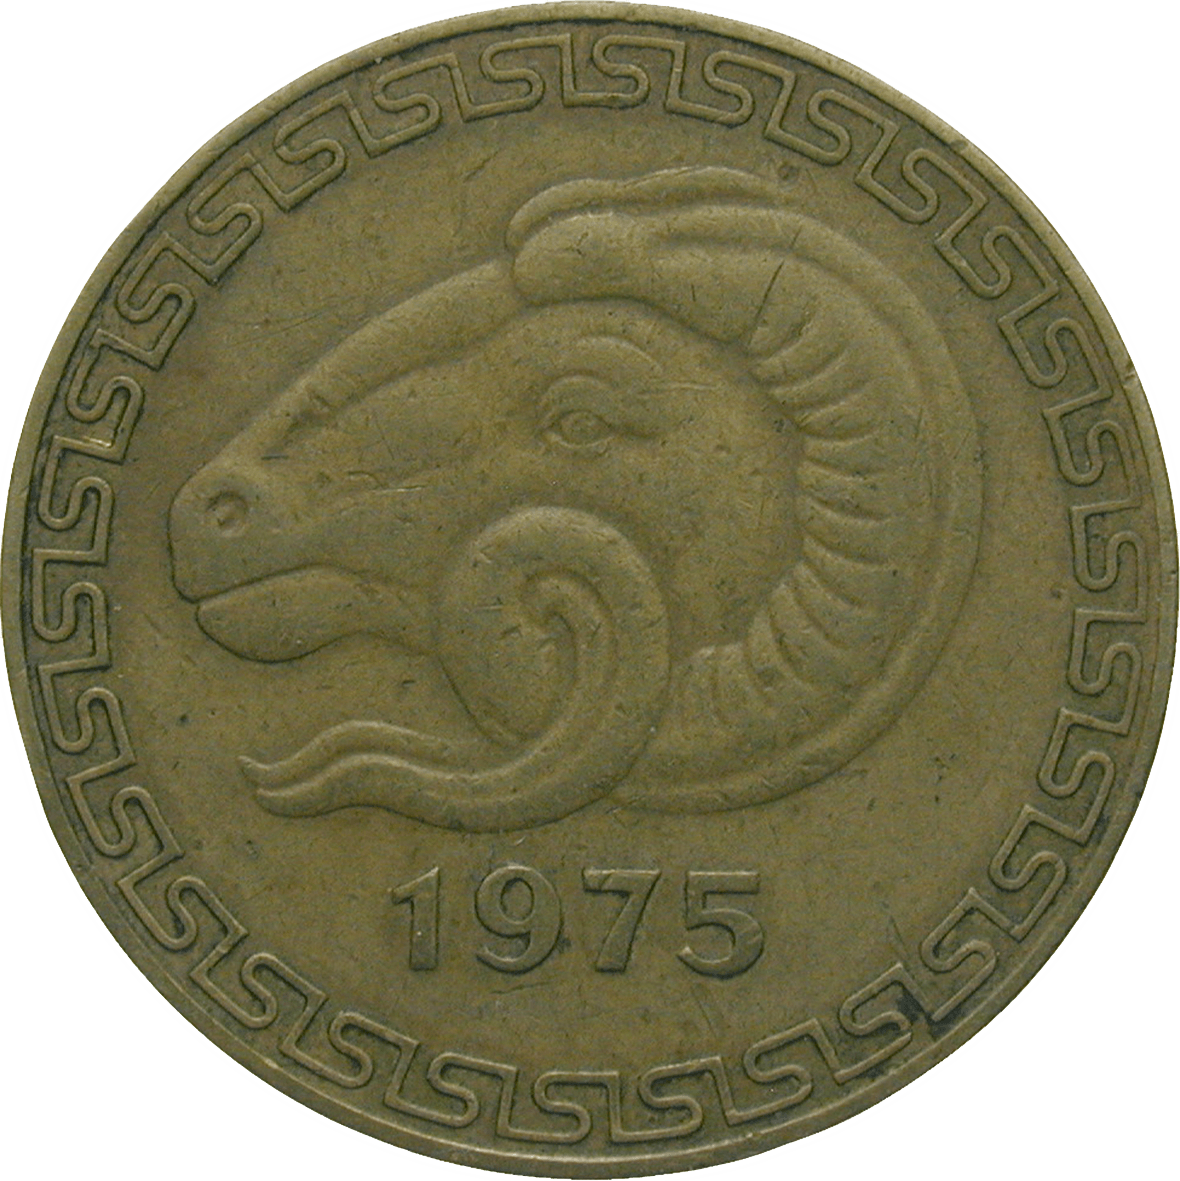 Republic of Algeria, 20 Centimes 1975 (obverse)